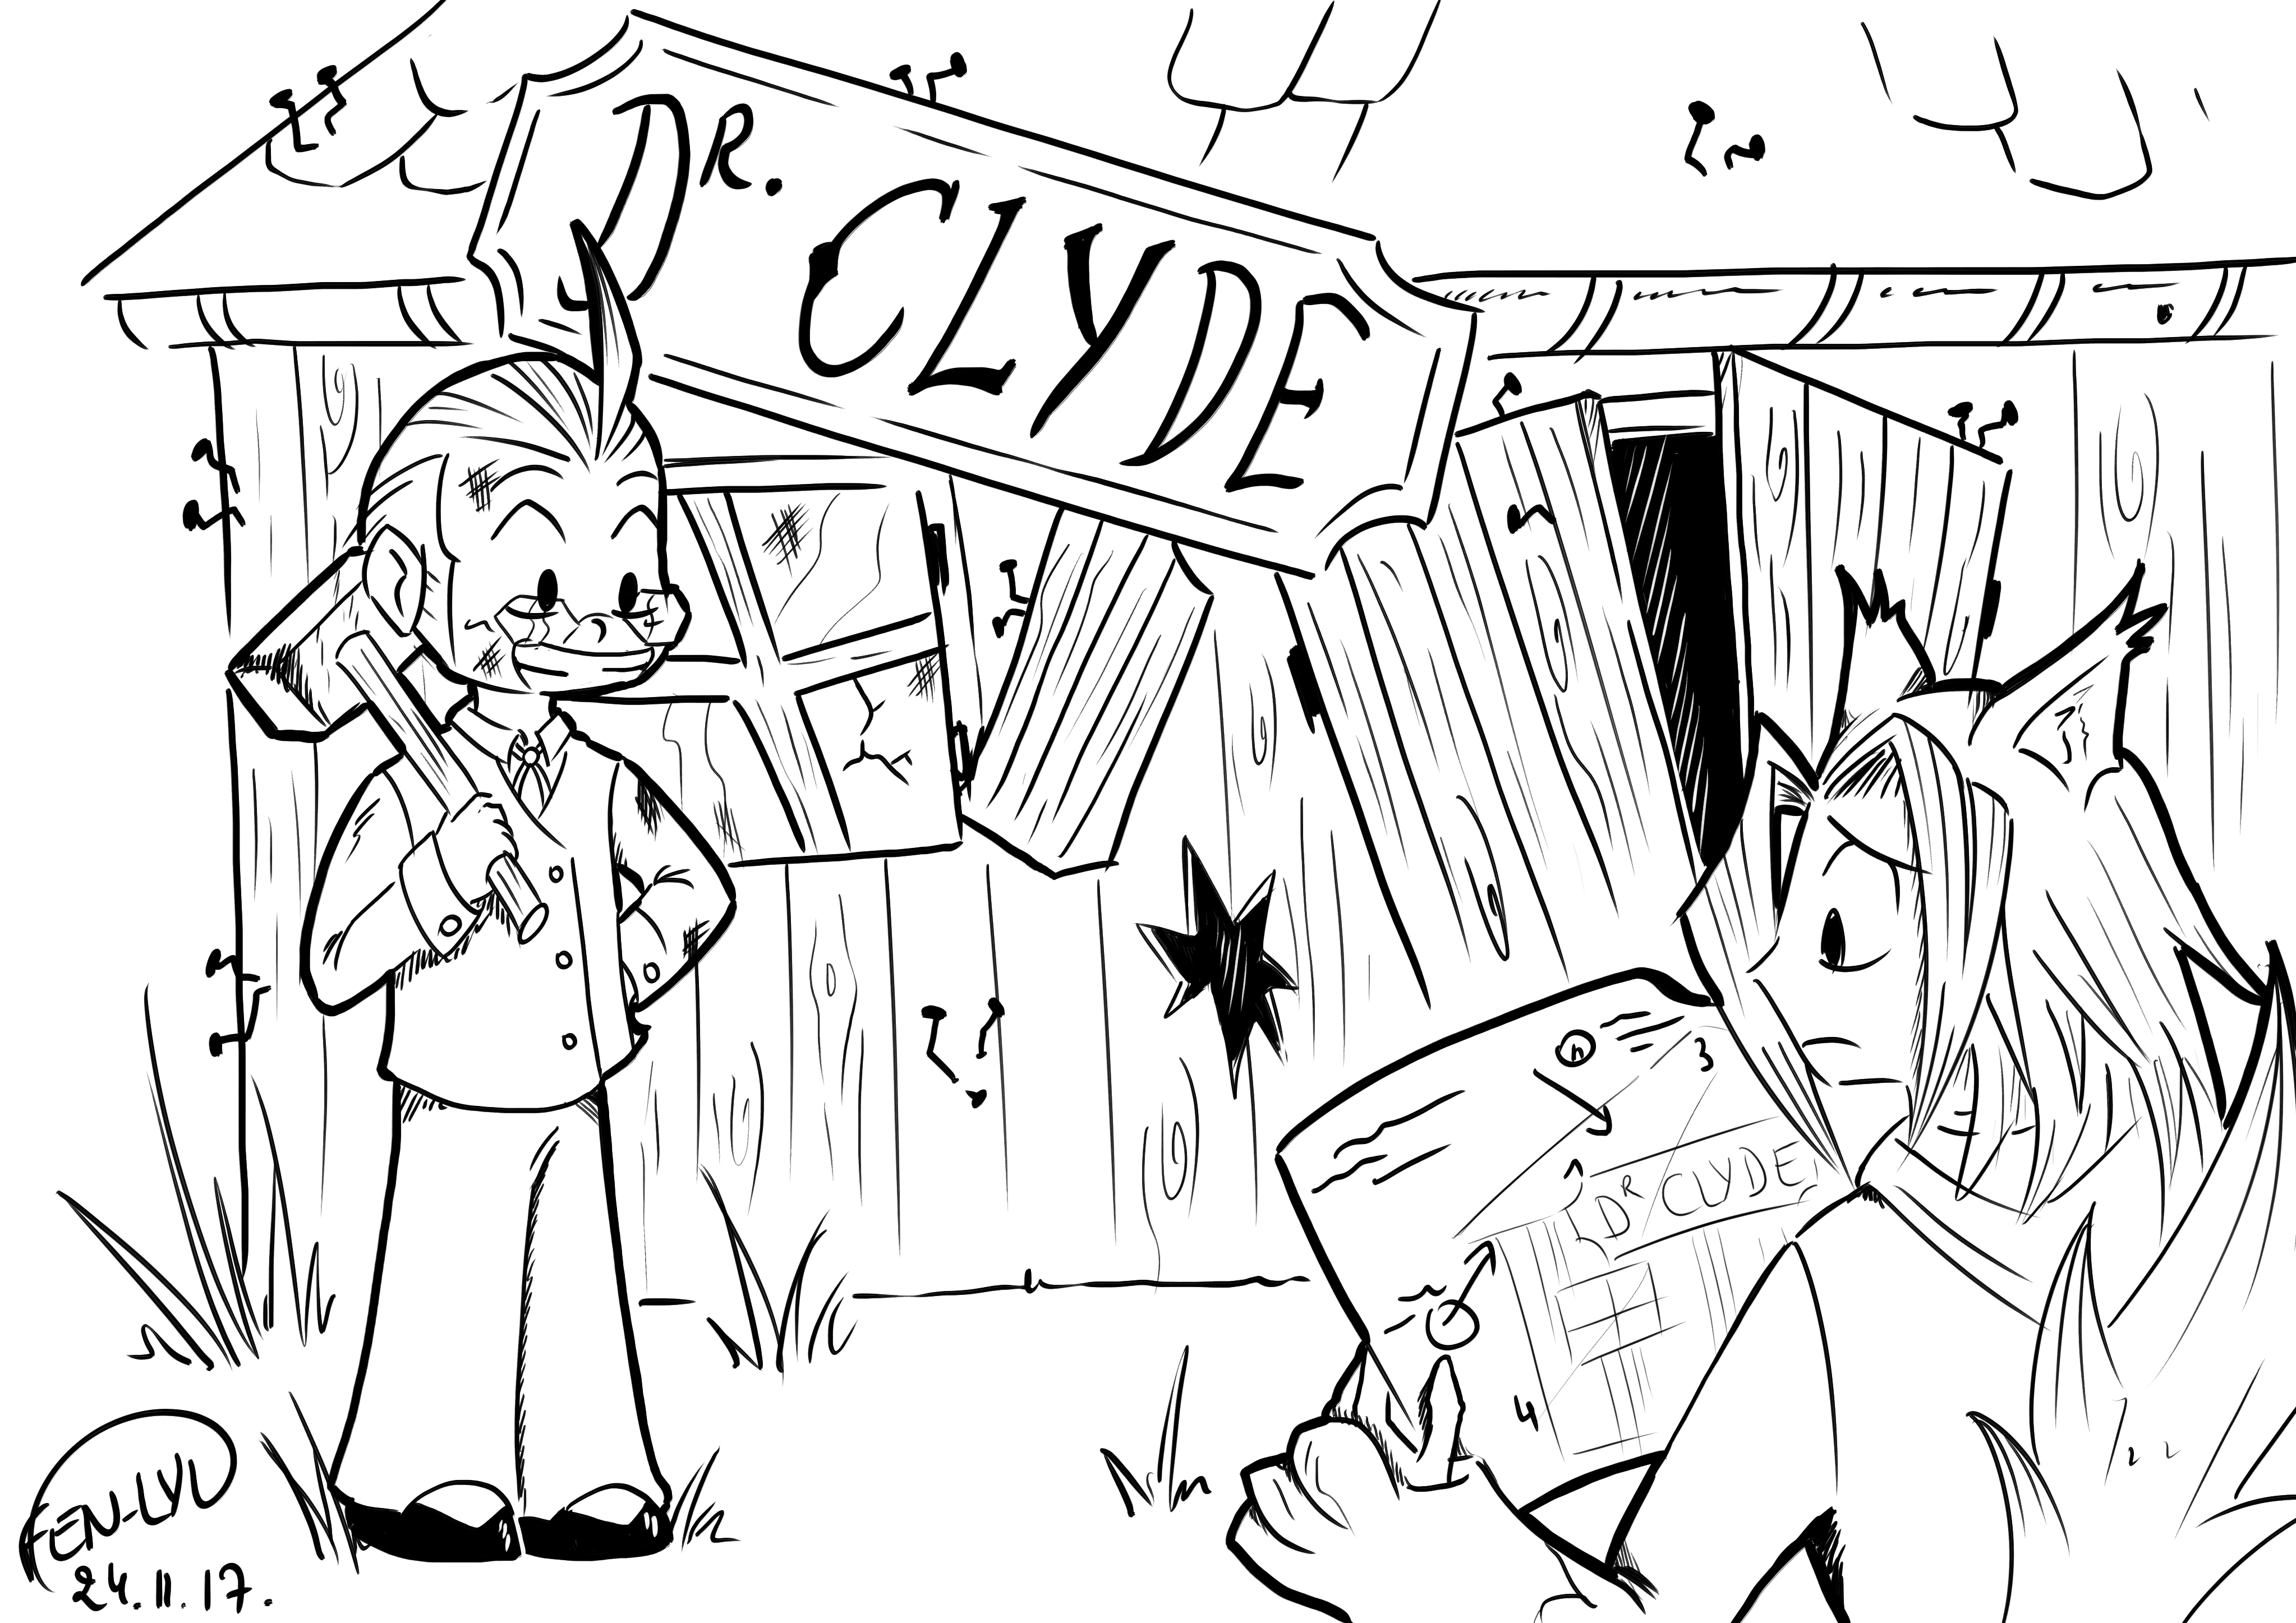 Distillerie Dr. Clyde